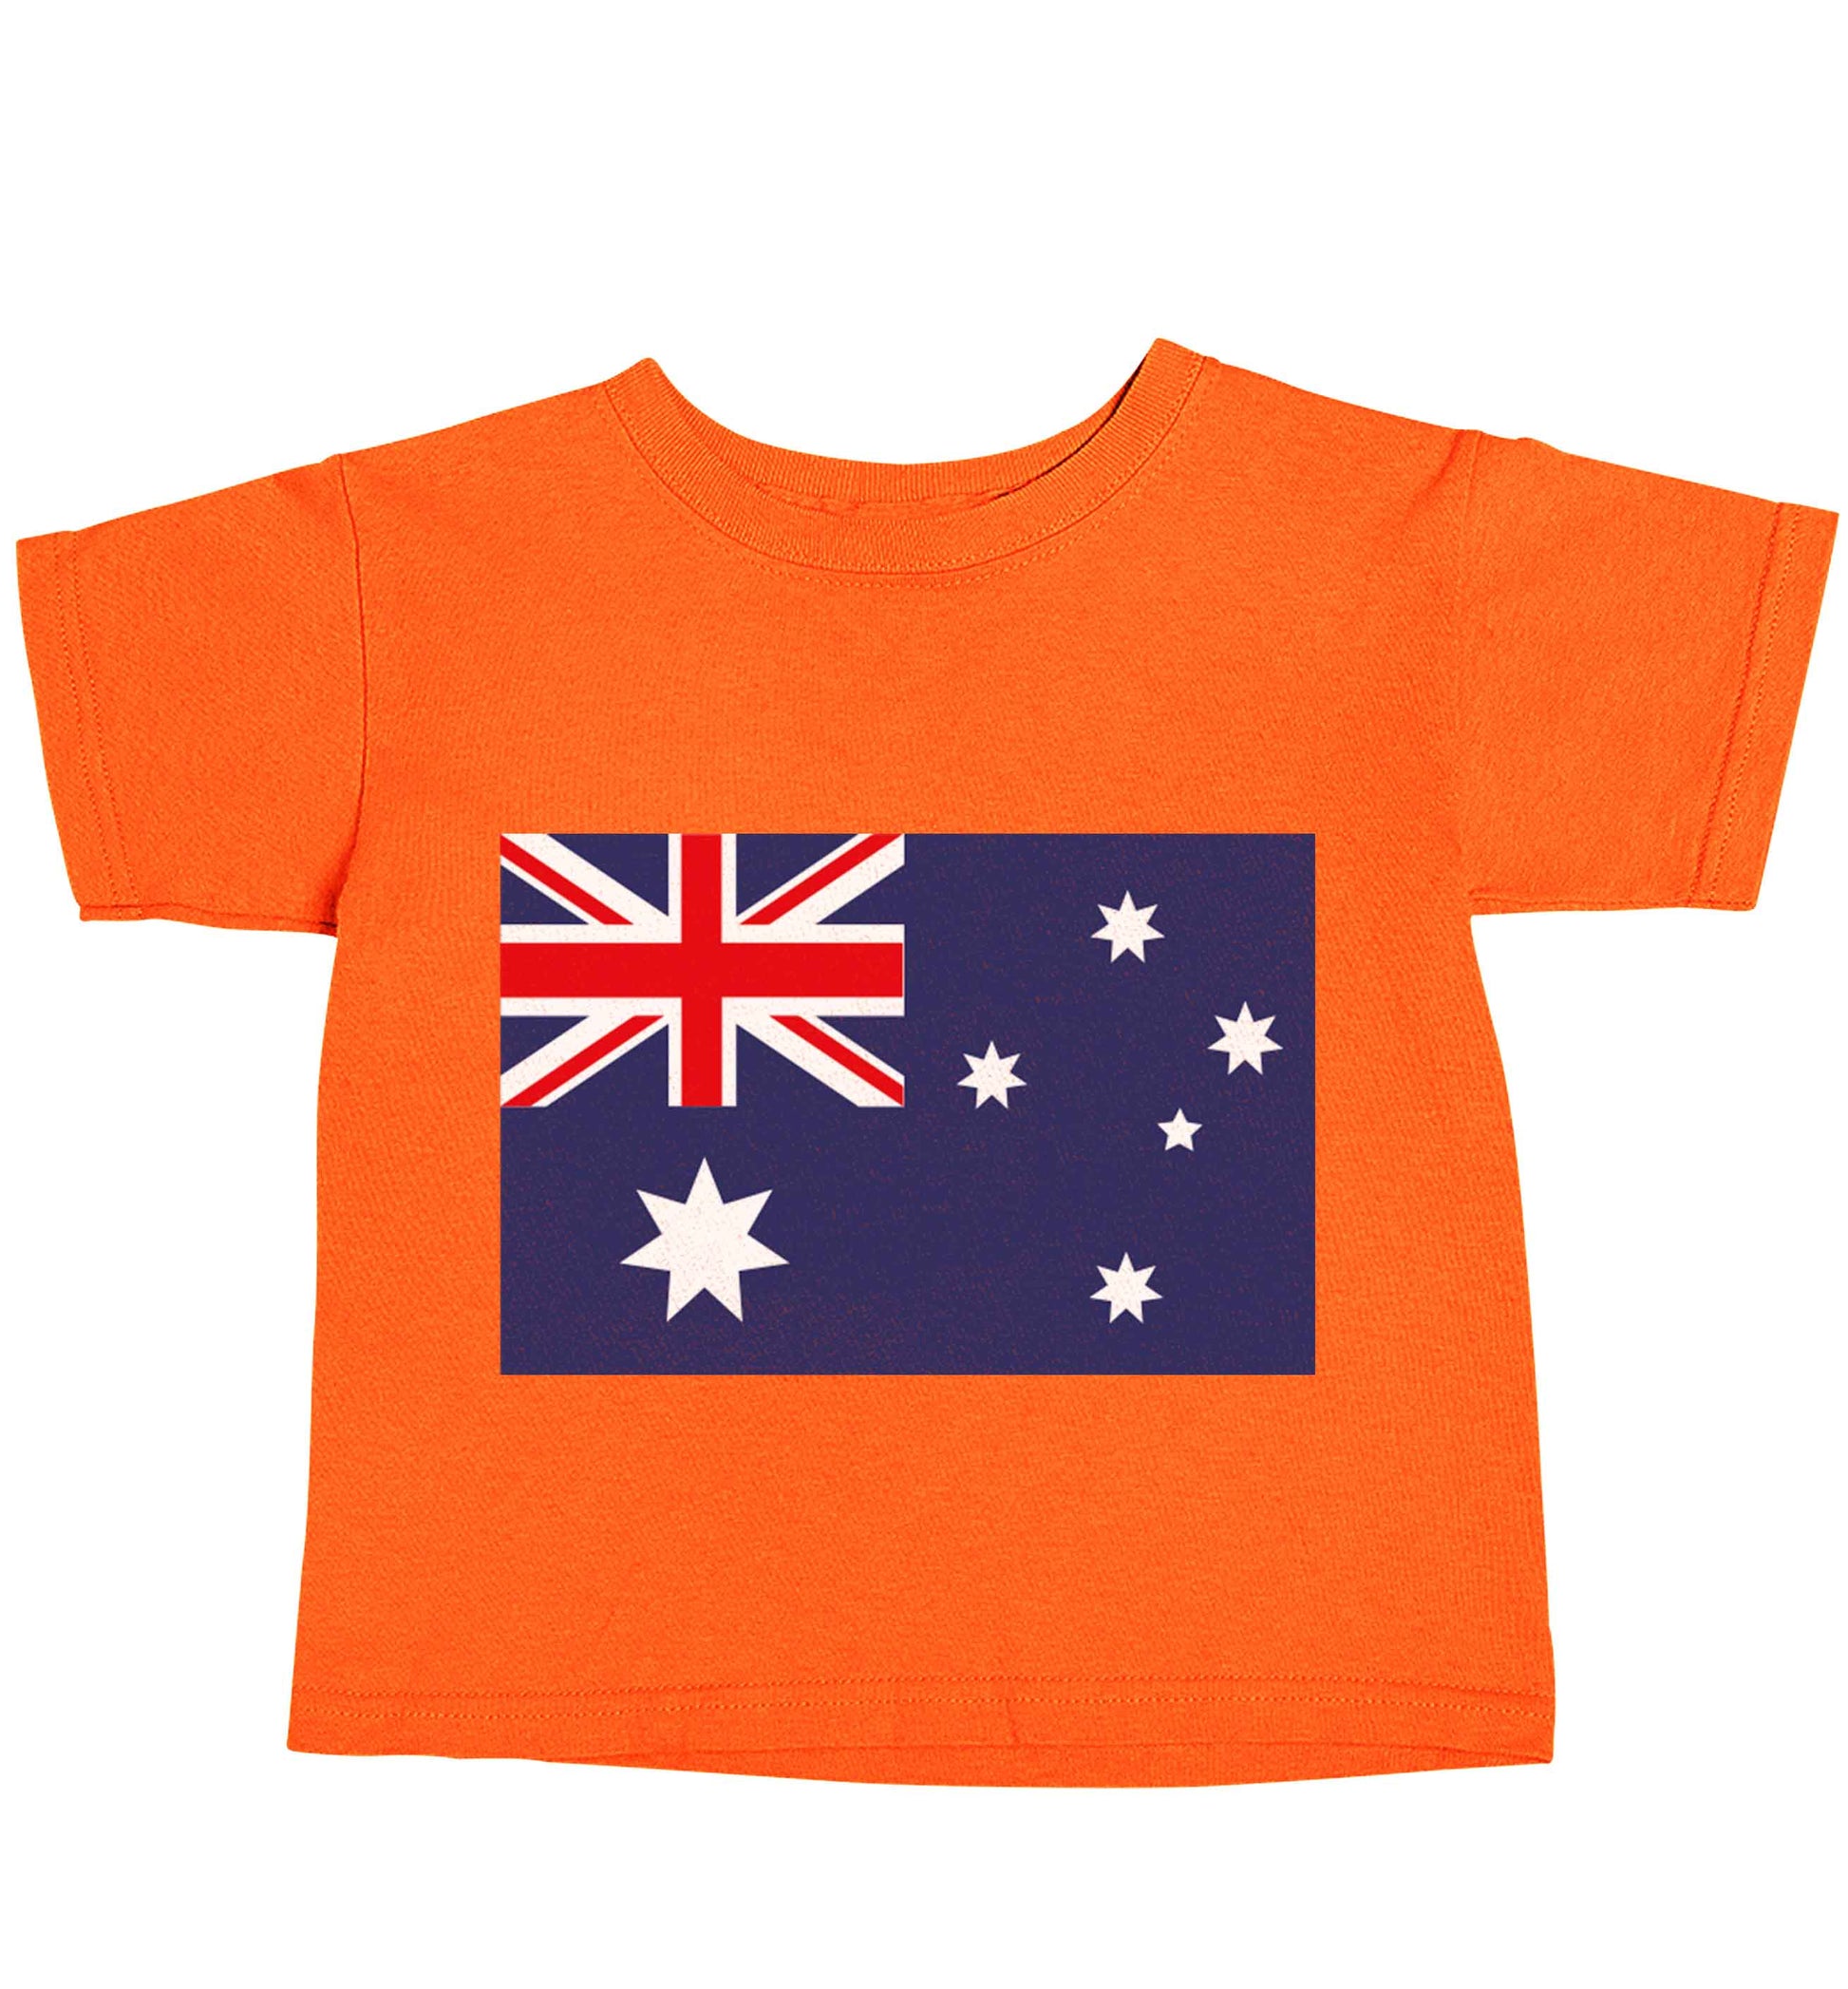 Australian Flag orange baby toddler Tshirt 2 Years